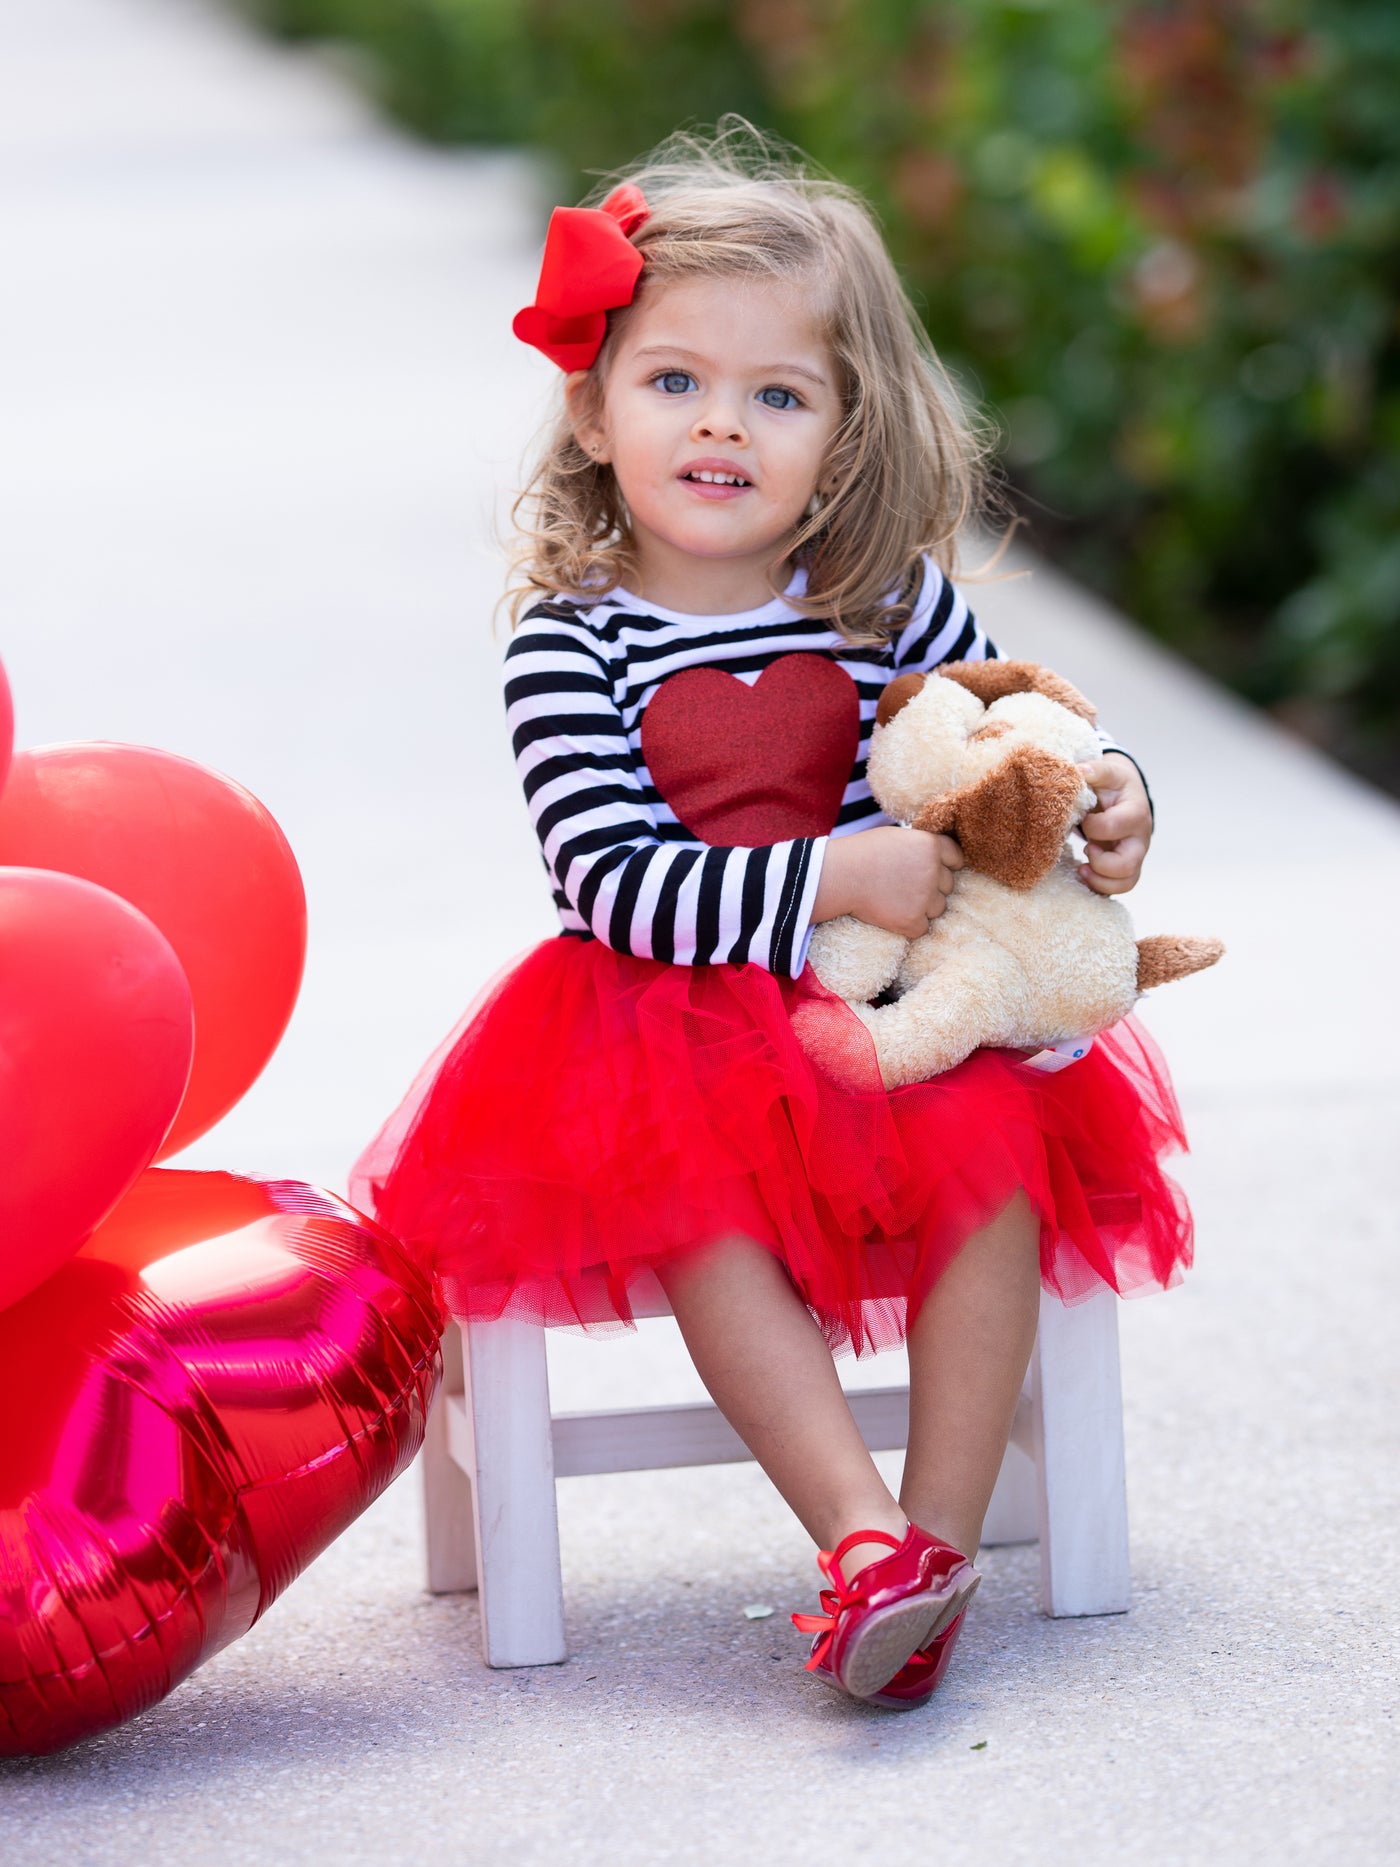 Toddler Valentine's Clothes | Girls Glittered Heart Striped Tutu Dress